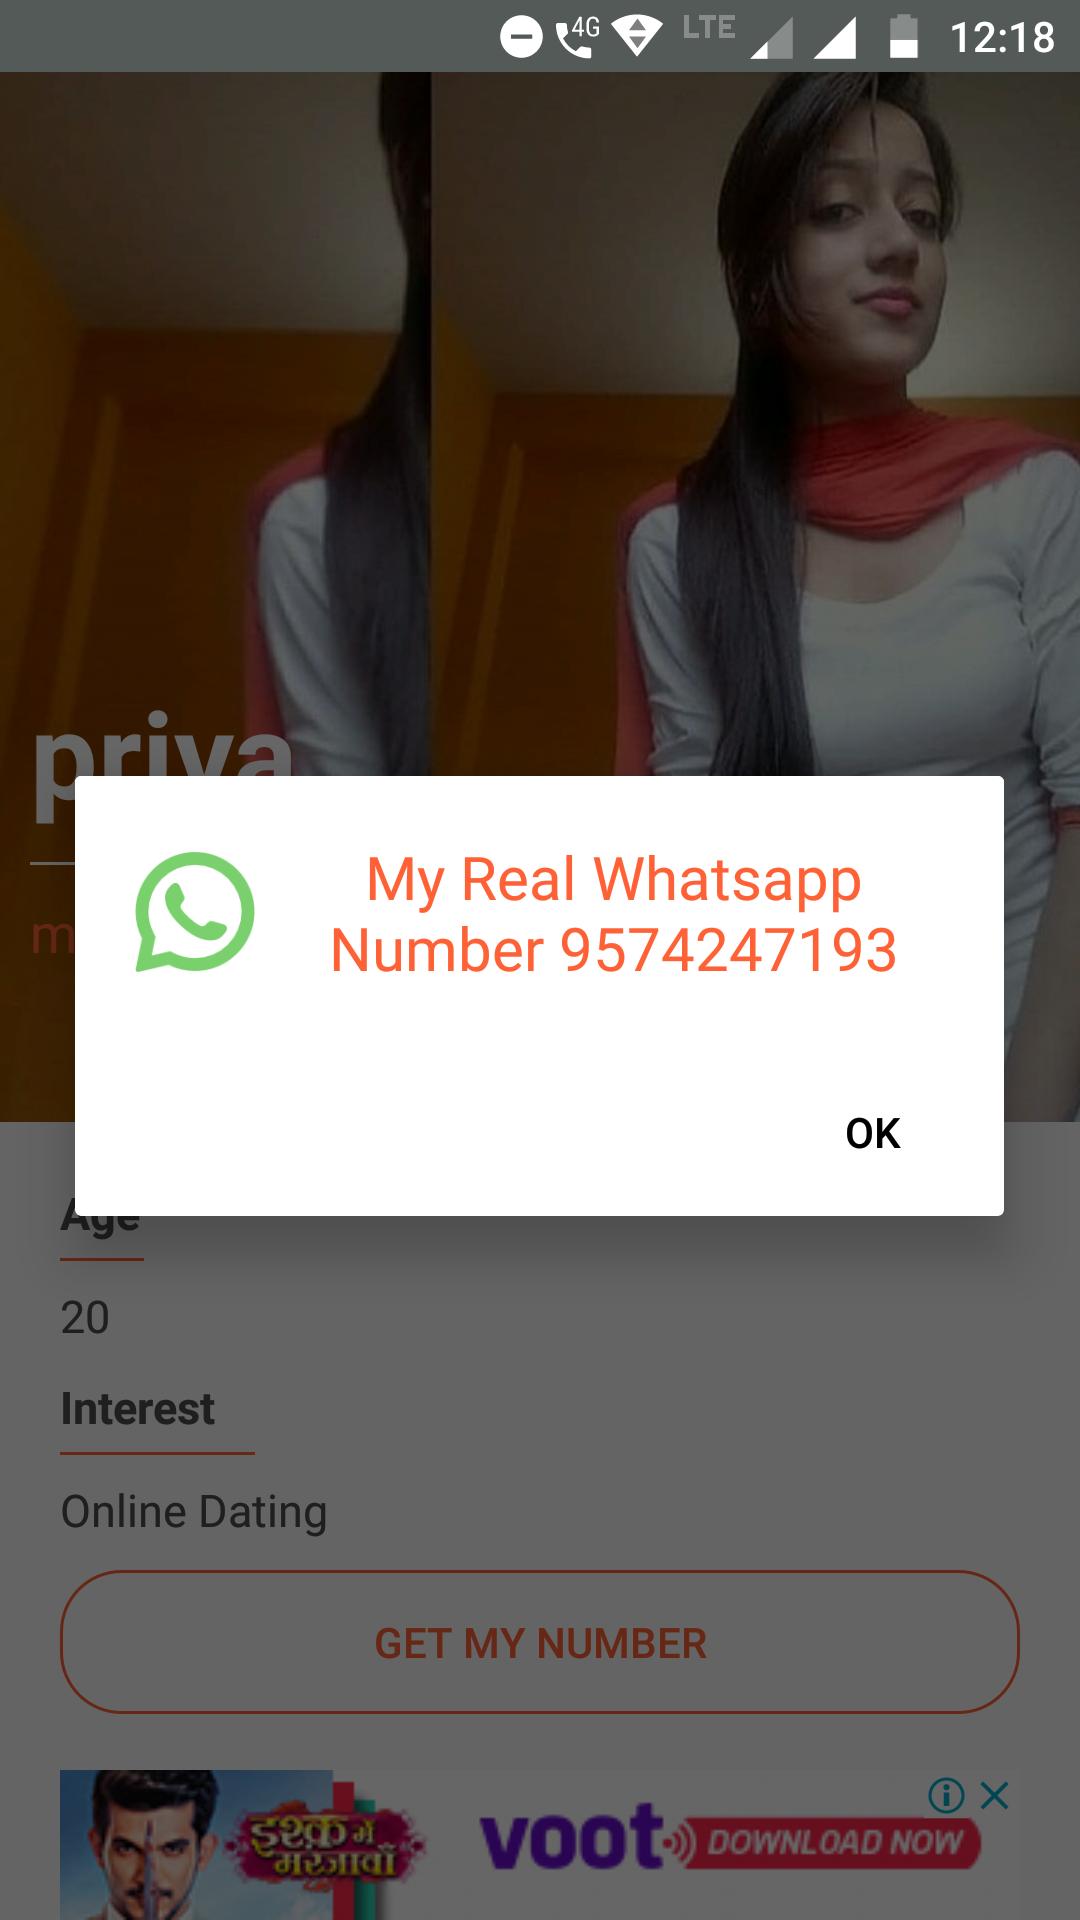 Whatsapp number of girl